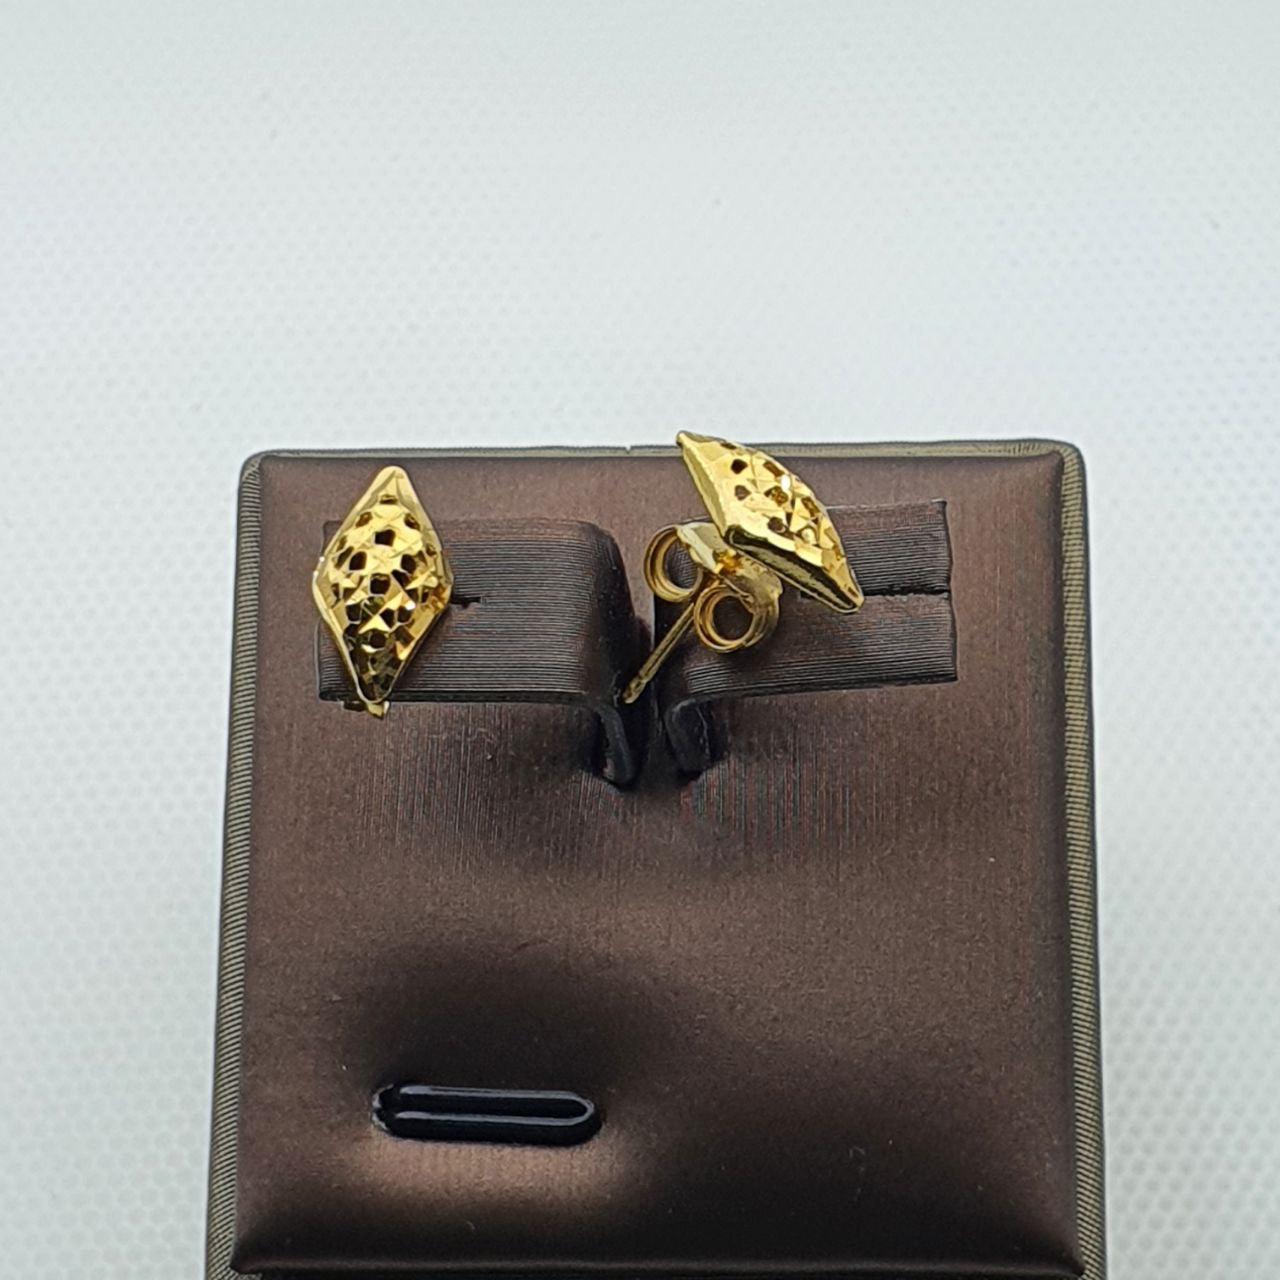 22k / 916 Gold Diamond design Earring-Earrings-Best Gold Shop